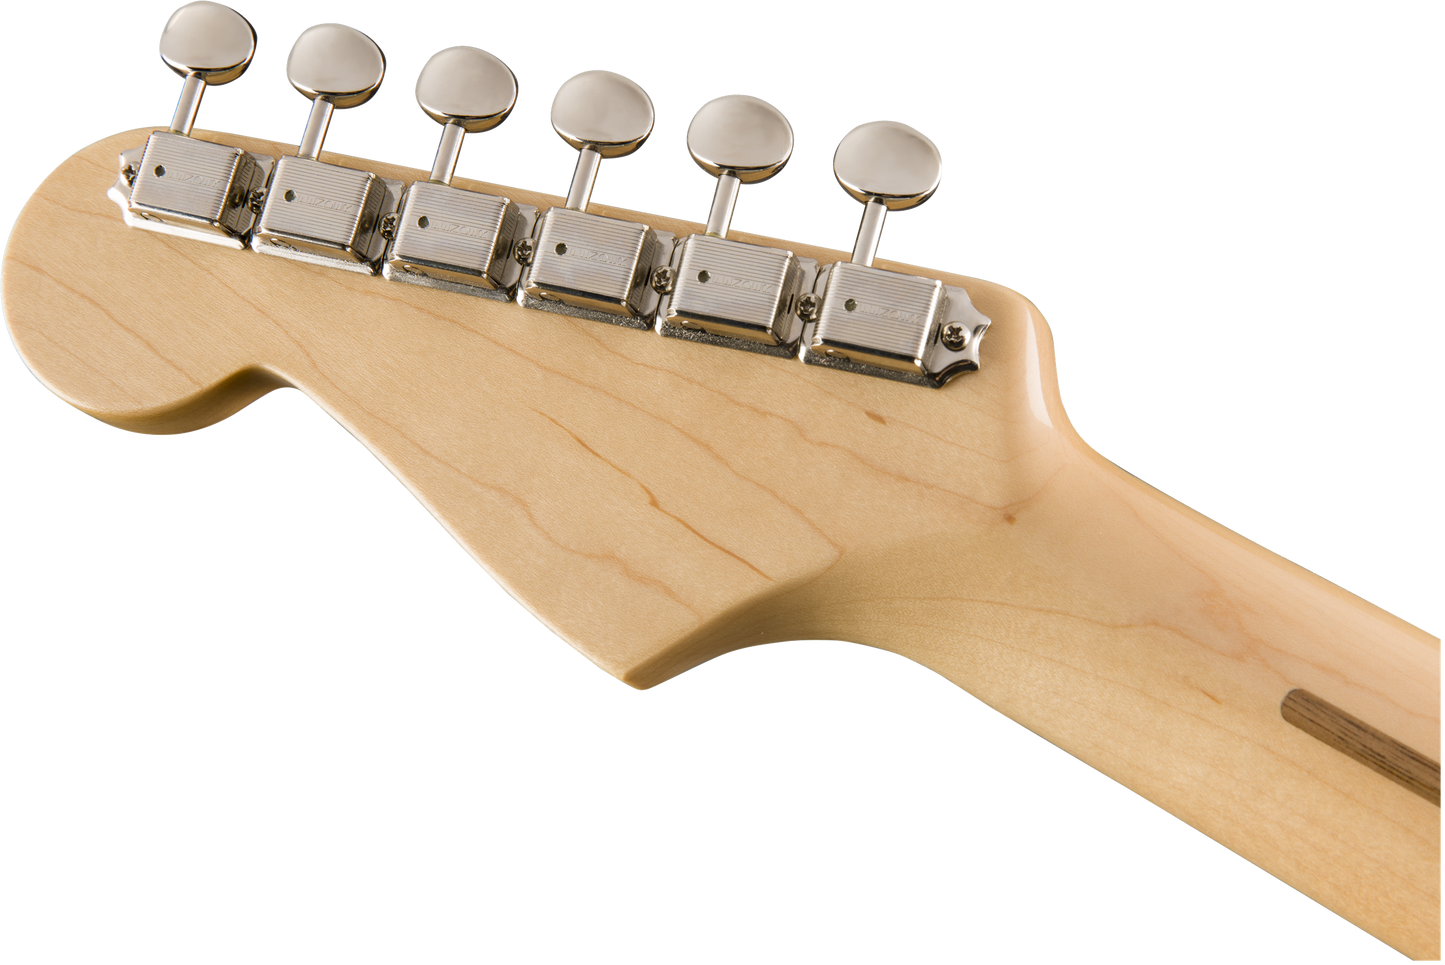 Fender American Original 50's Stratocaster In White Blonde